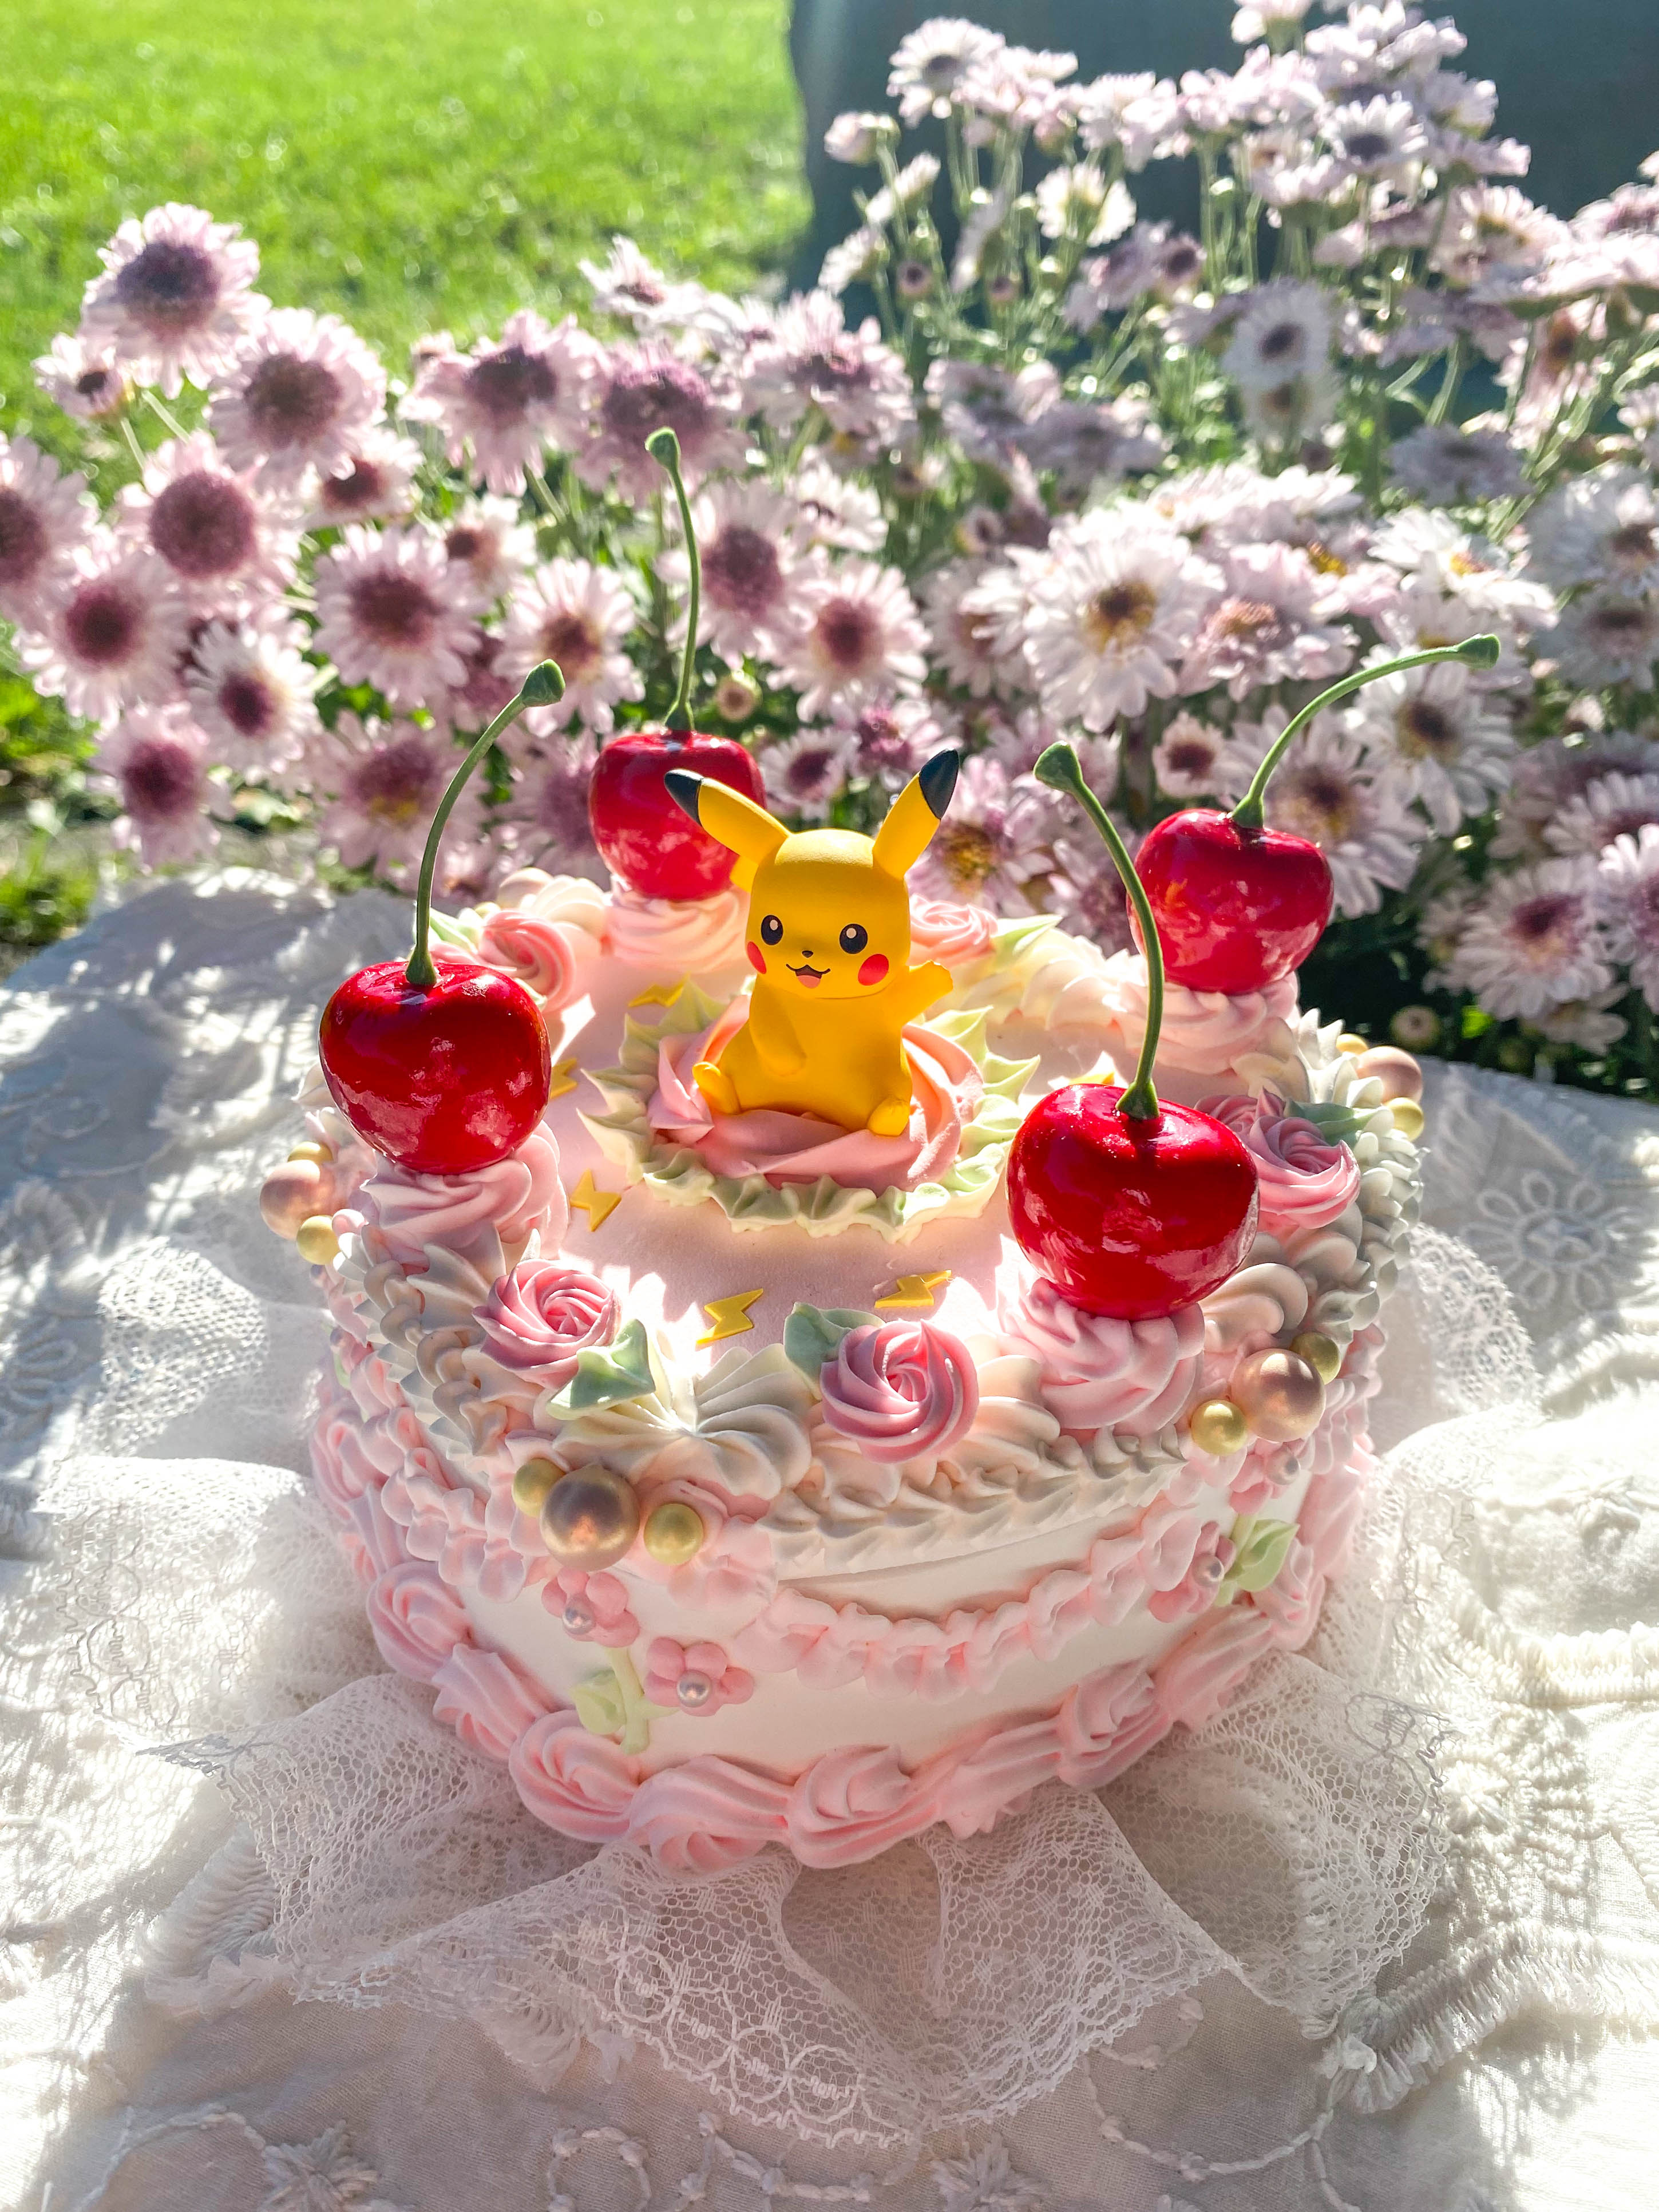 How To Make Pokémon Pikachu Cake | Easy Pikachu Cake Tutorial | Pikachu  Theme Cake | Honey Ki Rasoi - YouTube